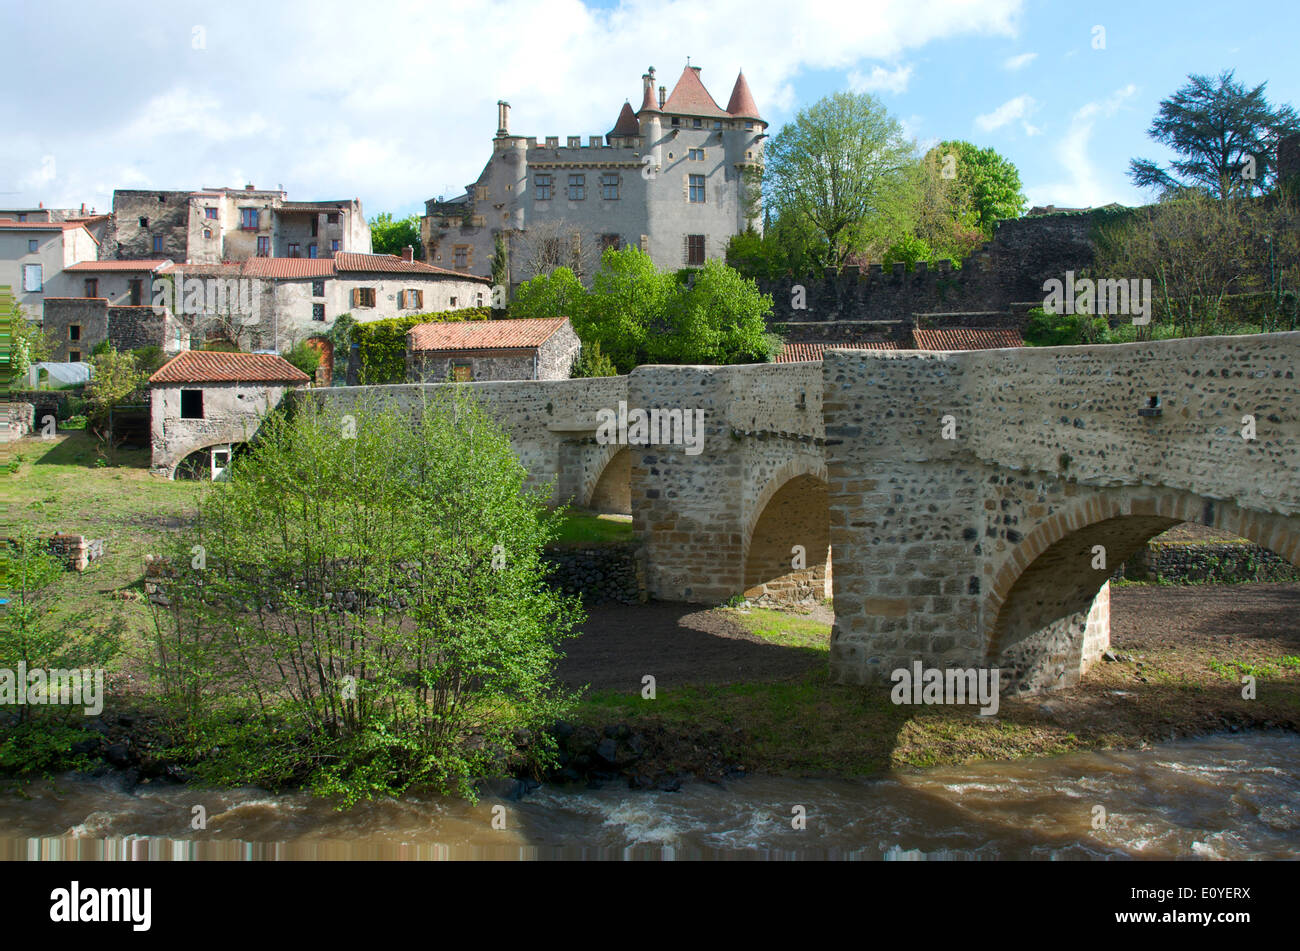 Saint-Amant-Tallende borgo e castello, Puy de Dome, Auvergne, Francia Foto Stock